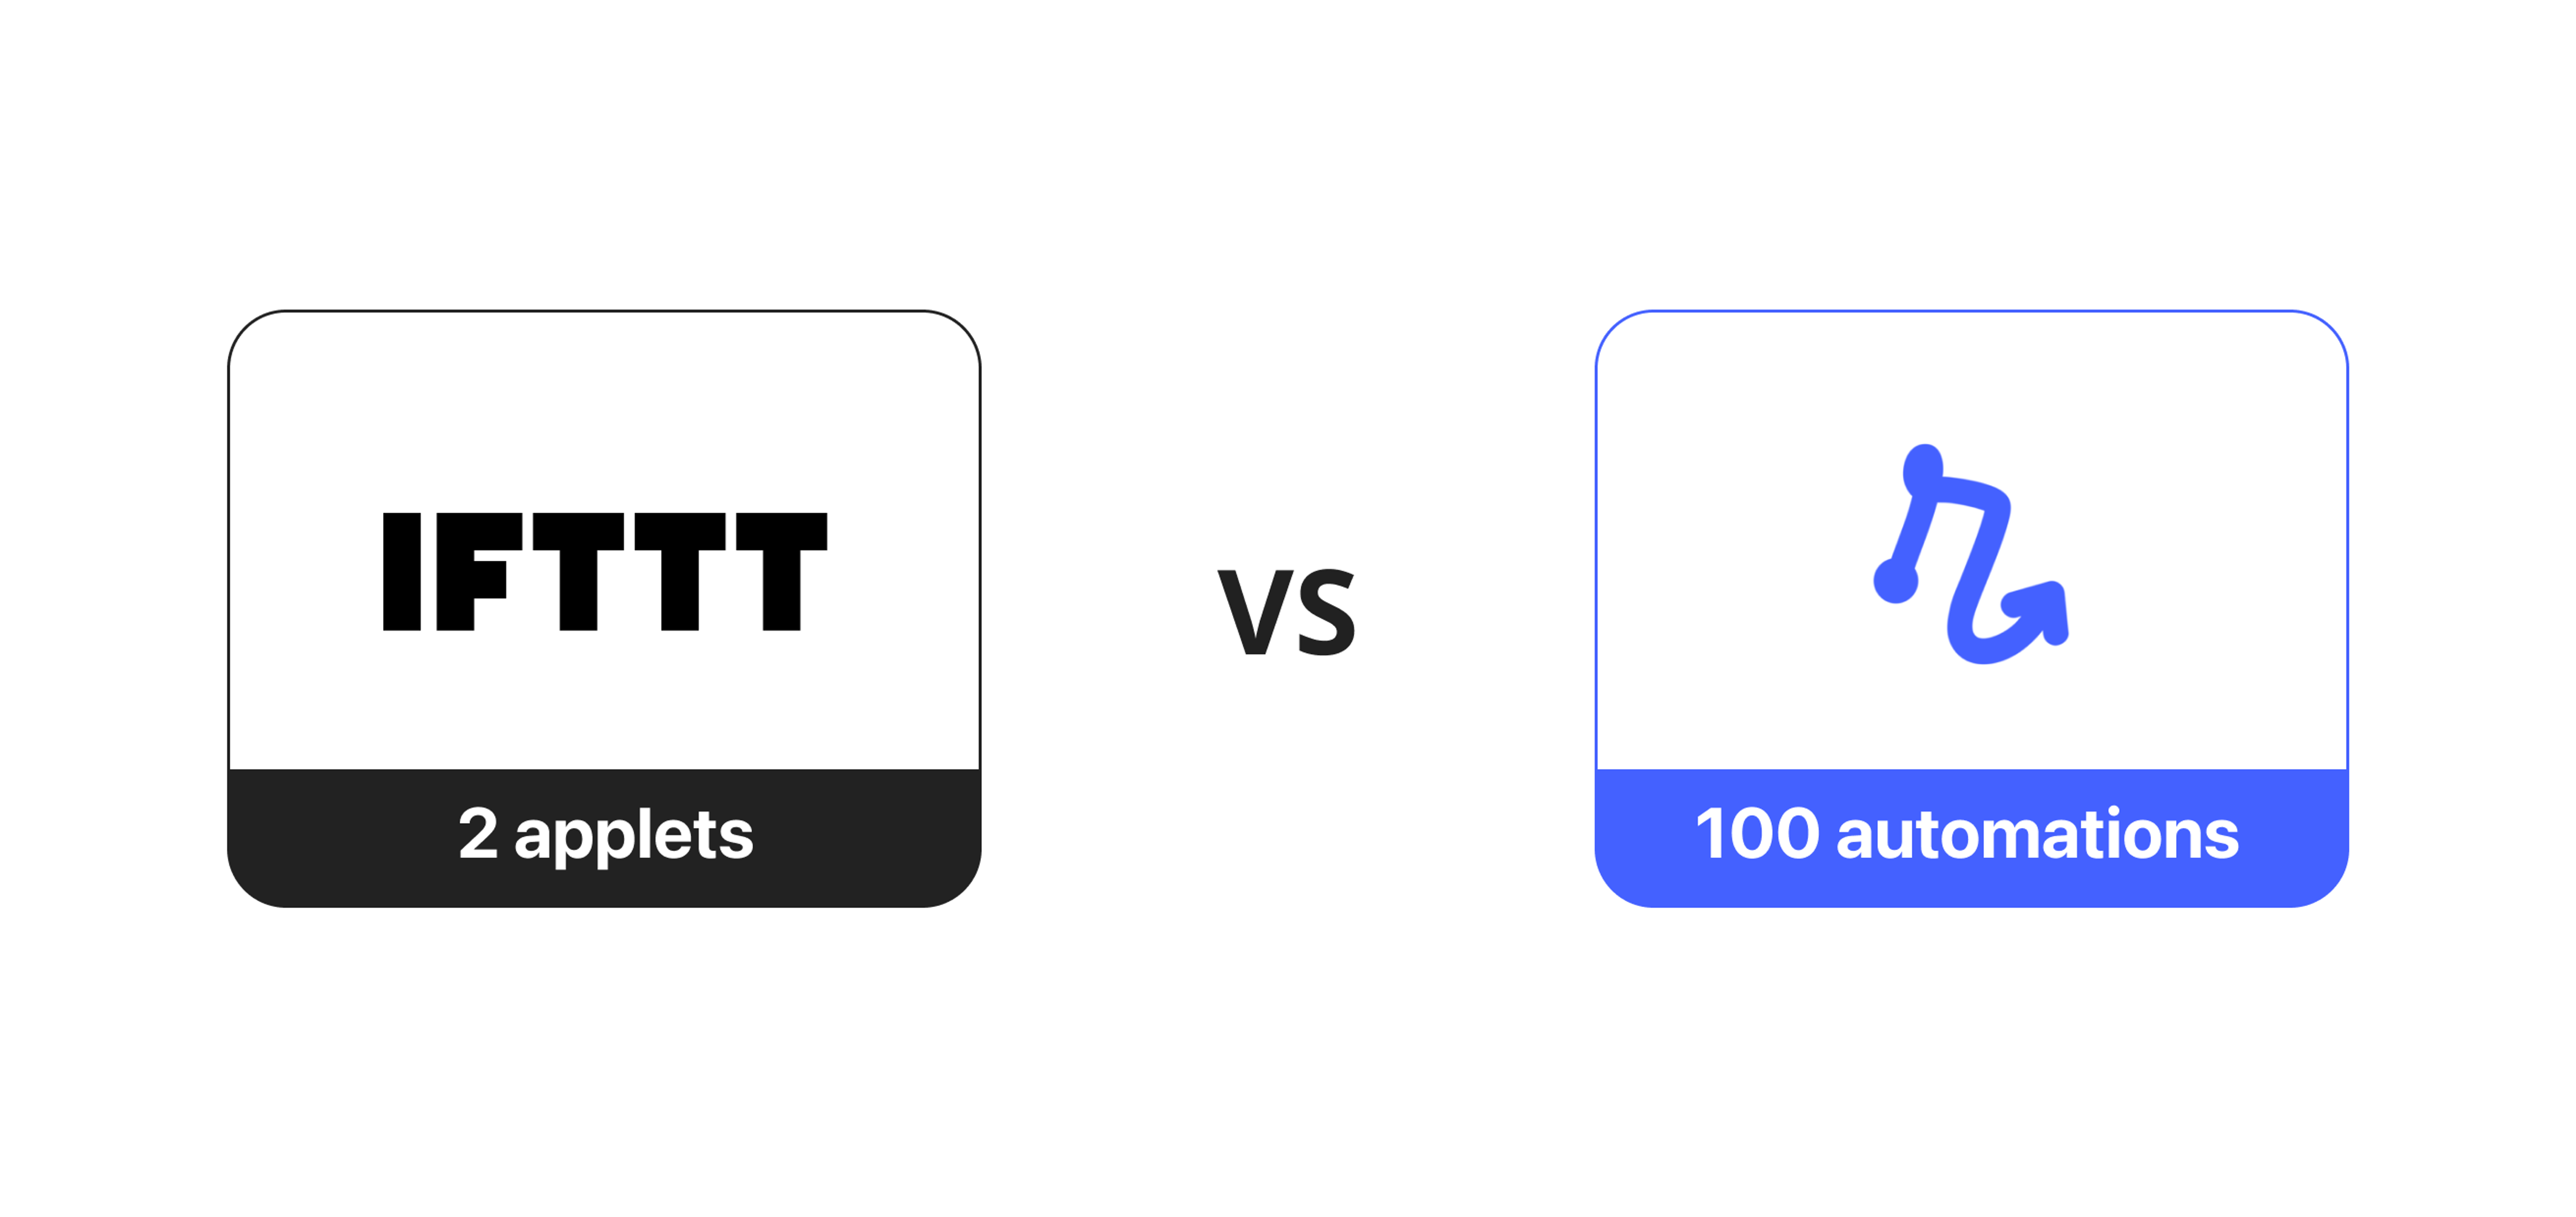 IFTTT vs Relay.app free plan limits